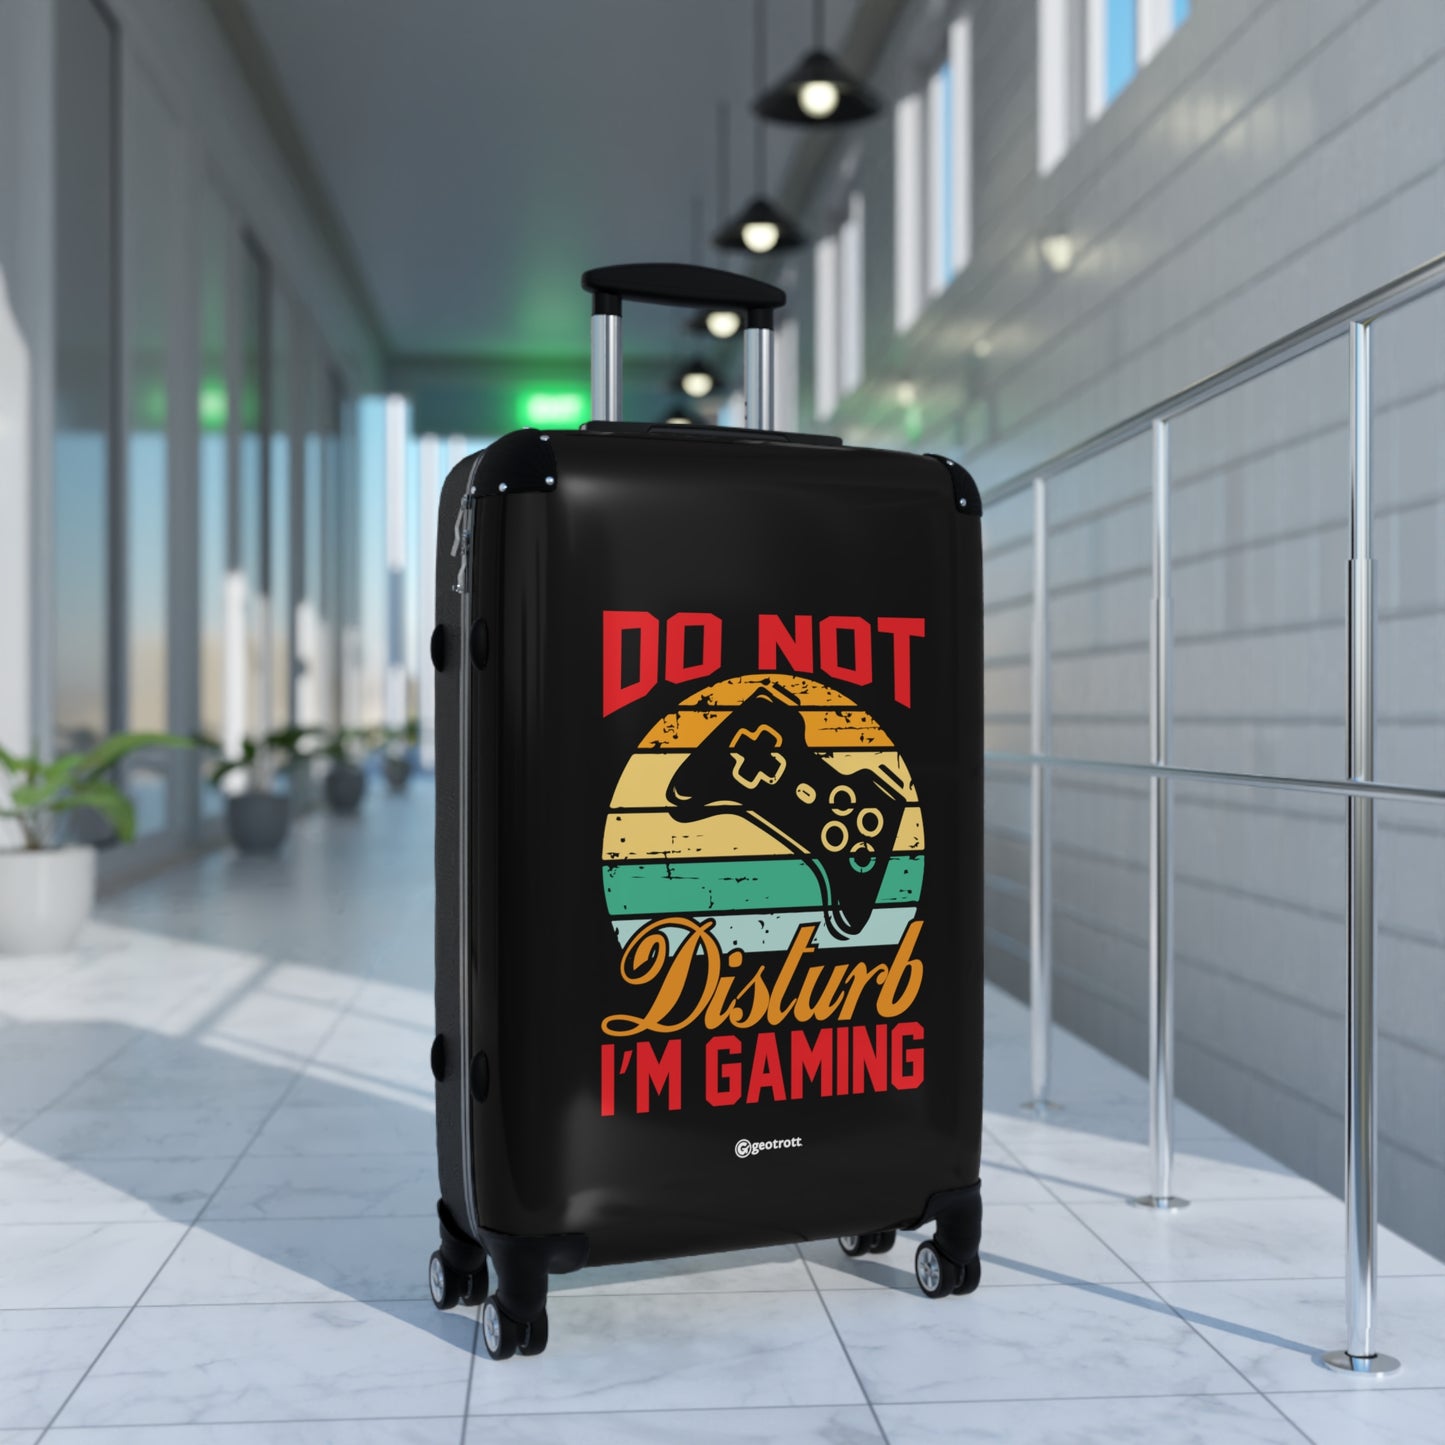 Do not Disturb I am Gaming Gamer-Suitcase-Geotrott